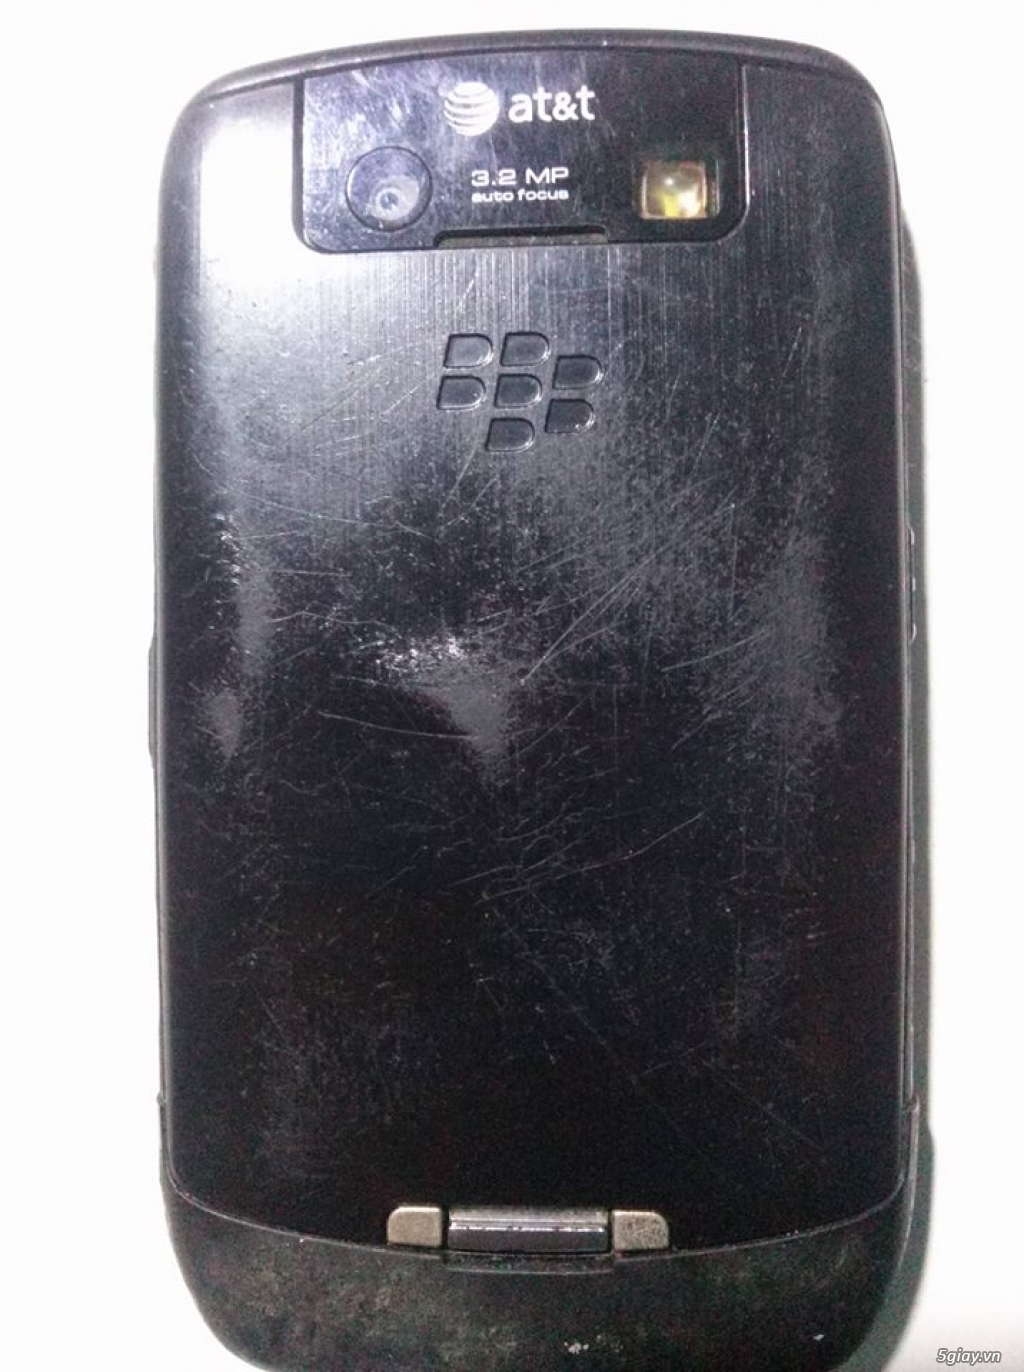 blackberry 6710,7290,8100,8300 lỗi nhẹ giá xác - 11